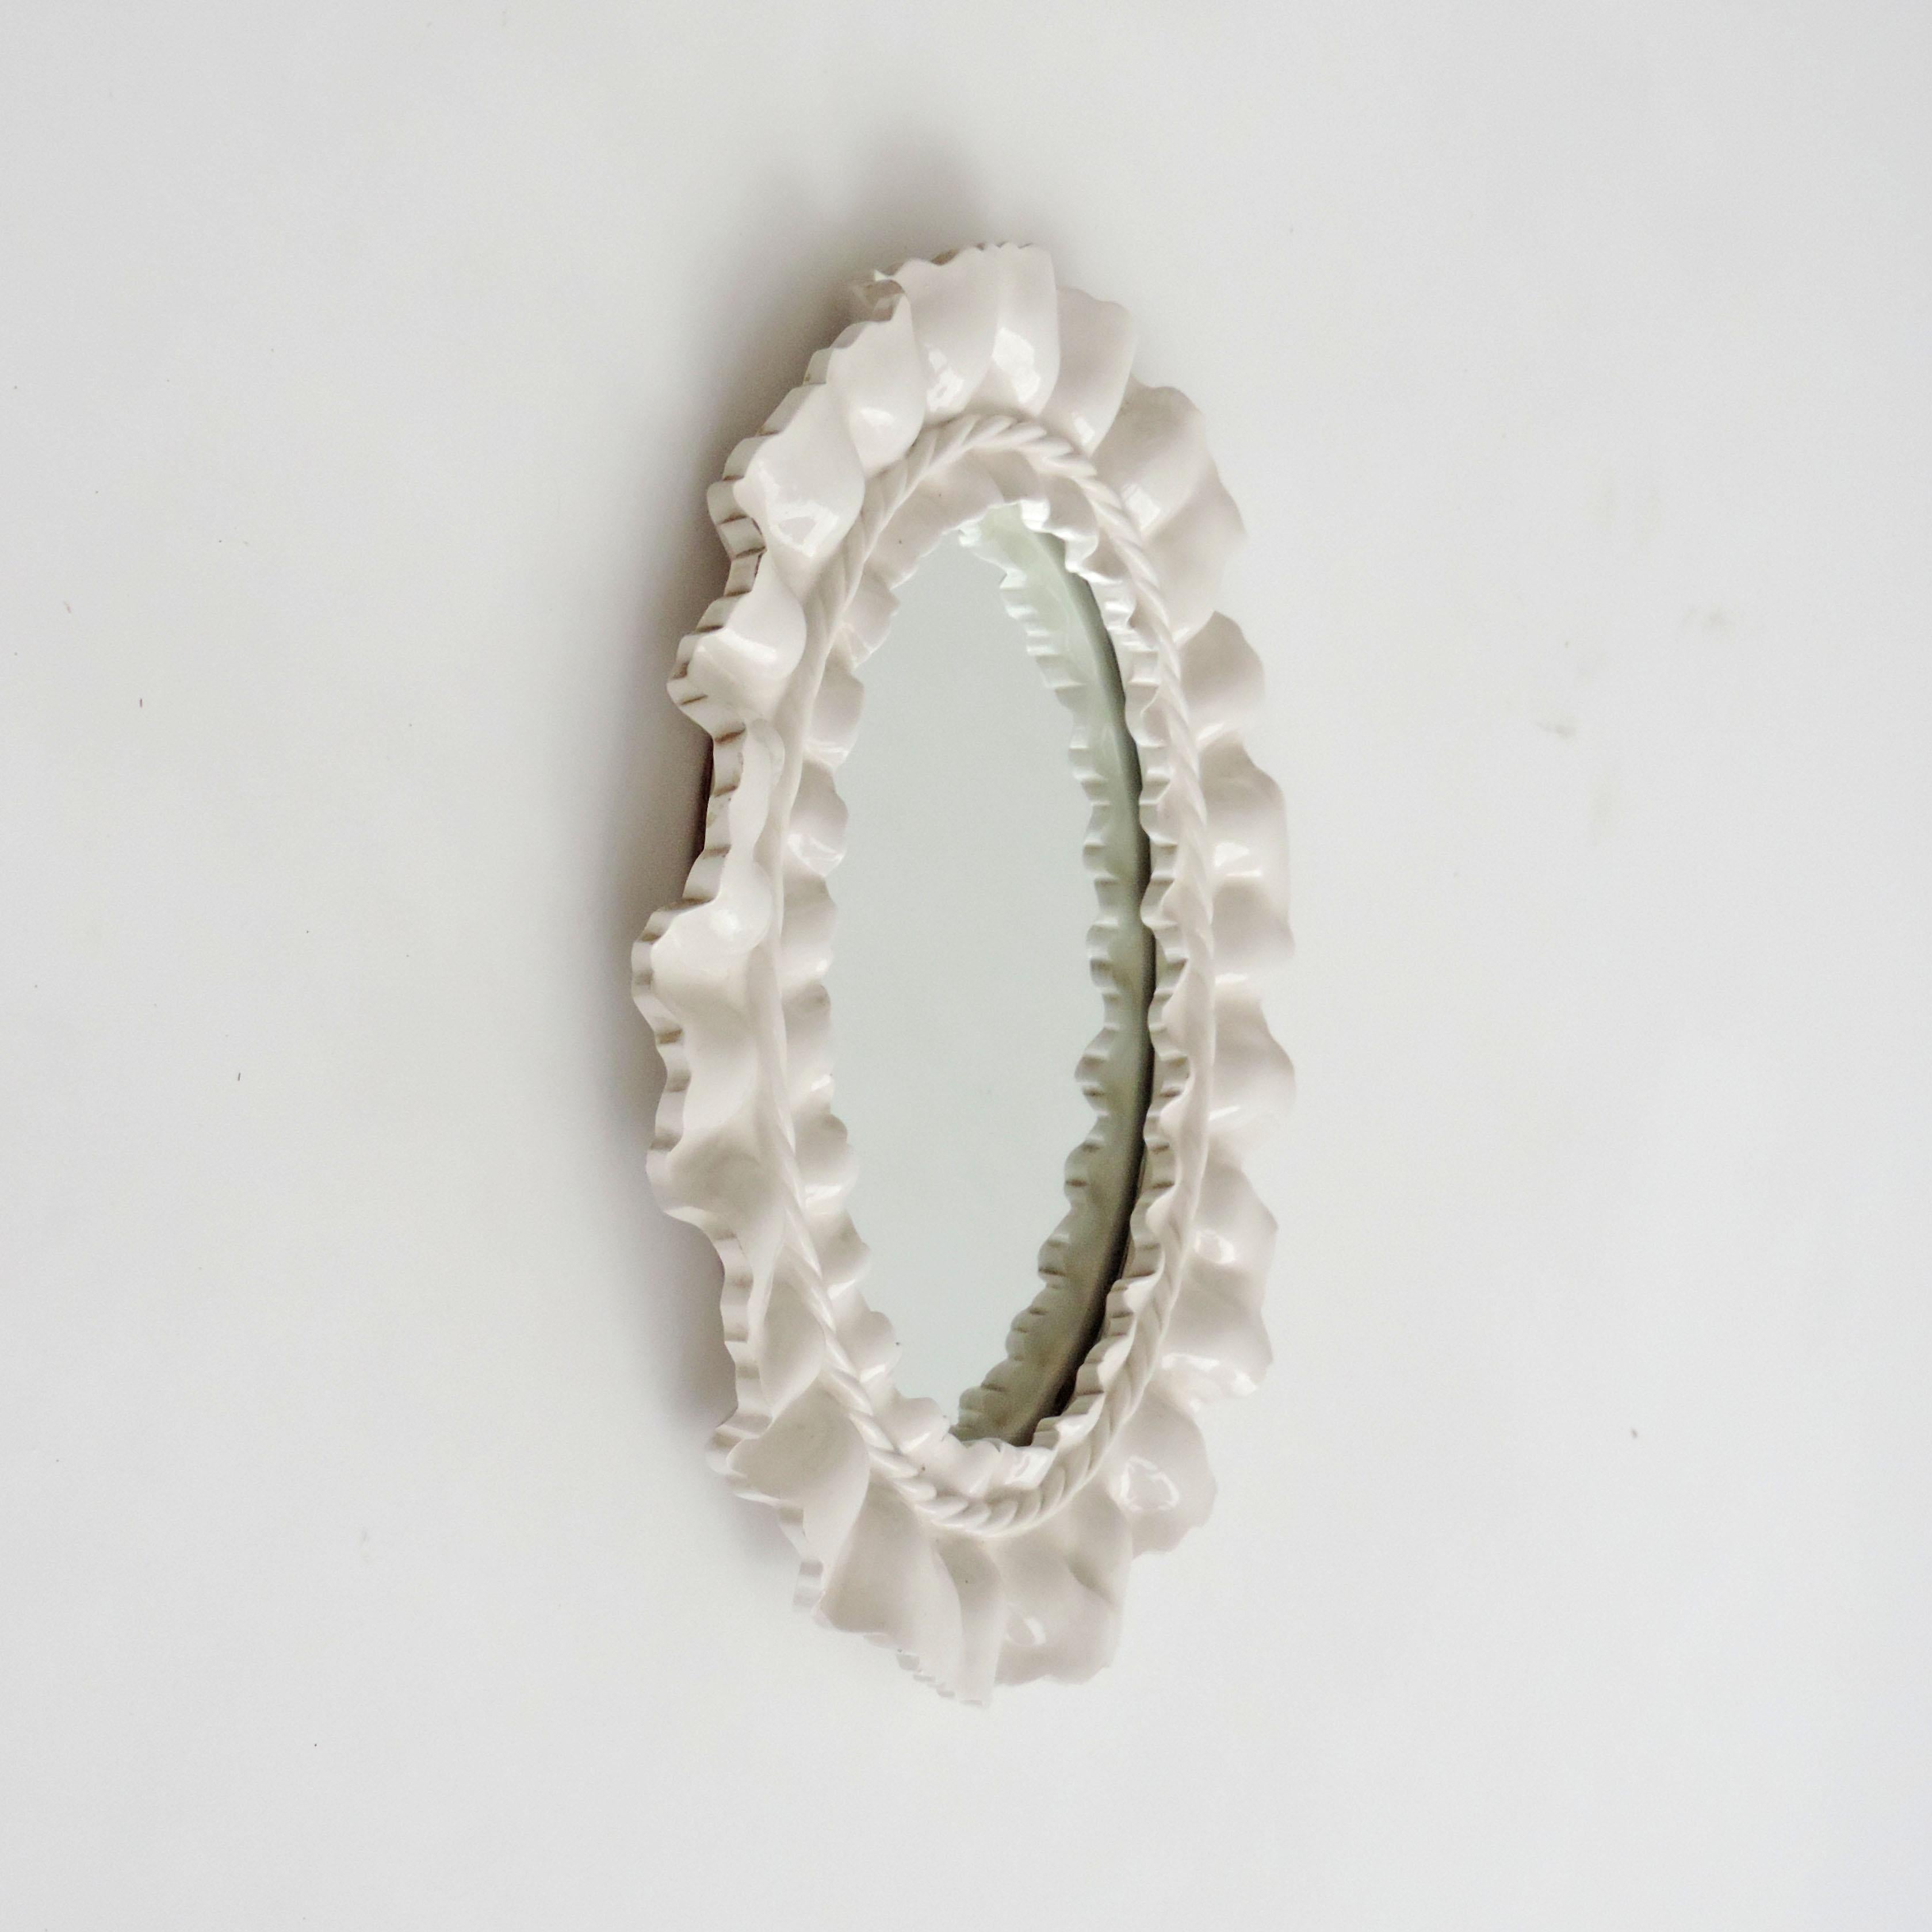 Splendid Italian 1950s surreal ceramic wall mirror.
In white, very decorative.